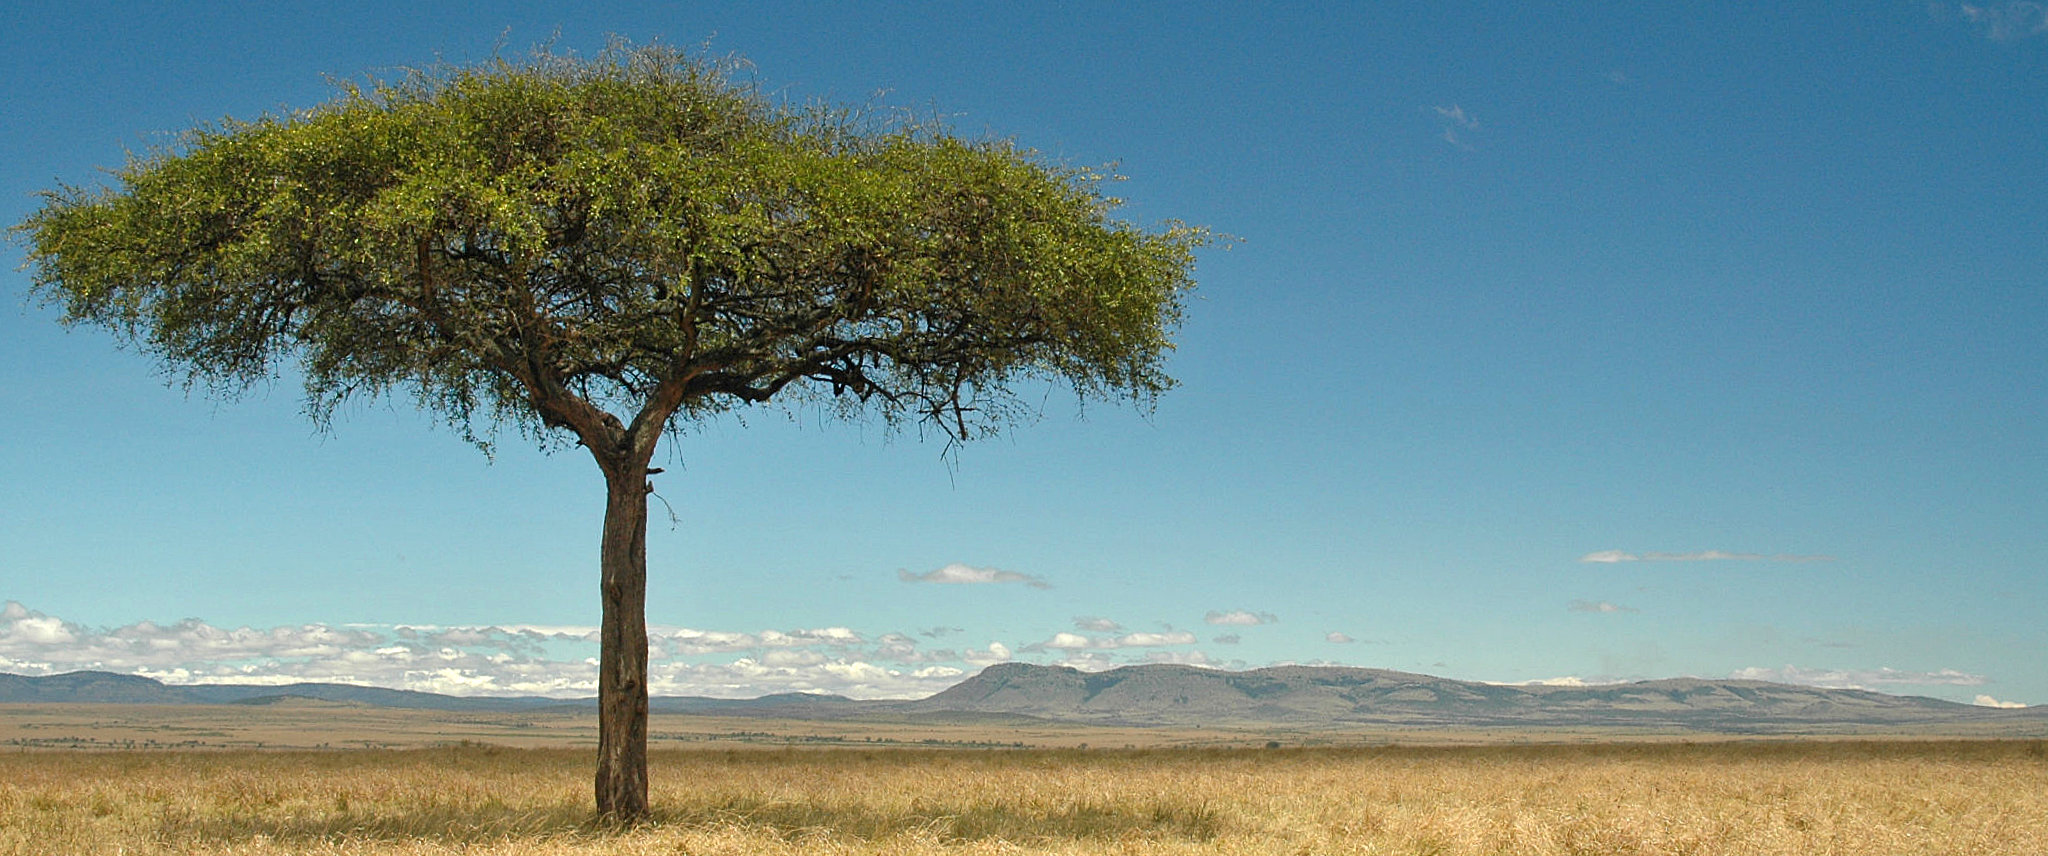 masai mara albero acacia hero image